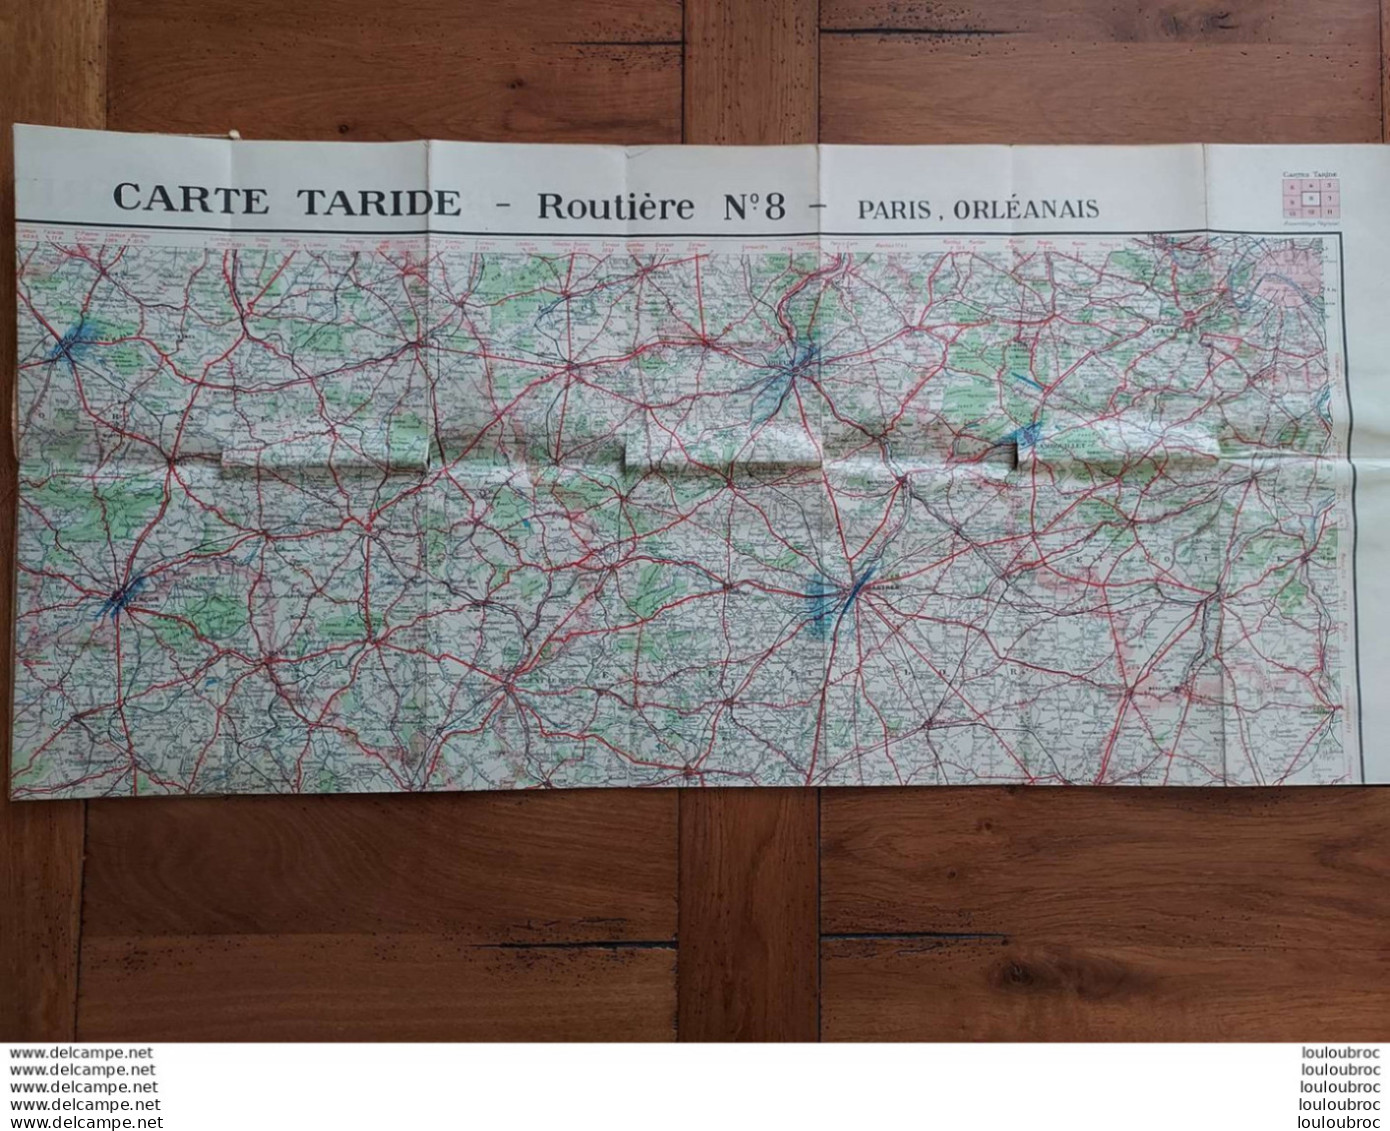 CARTE ROUTIERE TARIDE N°8 PARIS ORLEANAIS - Roadmaps